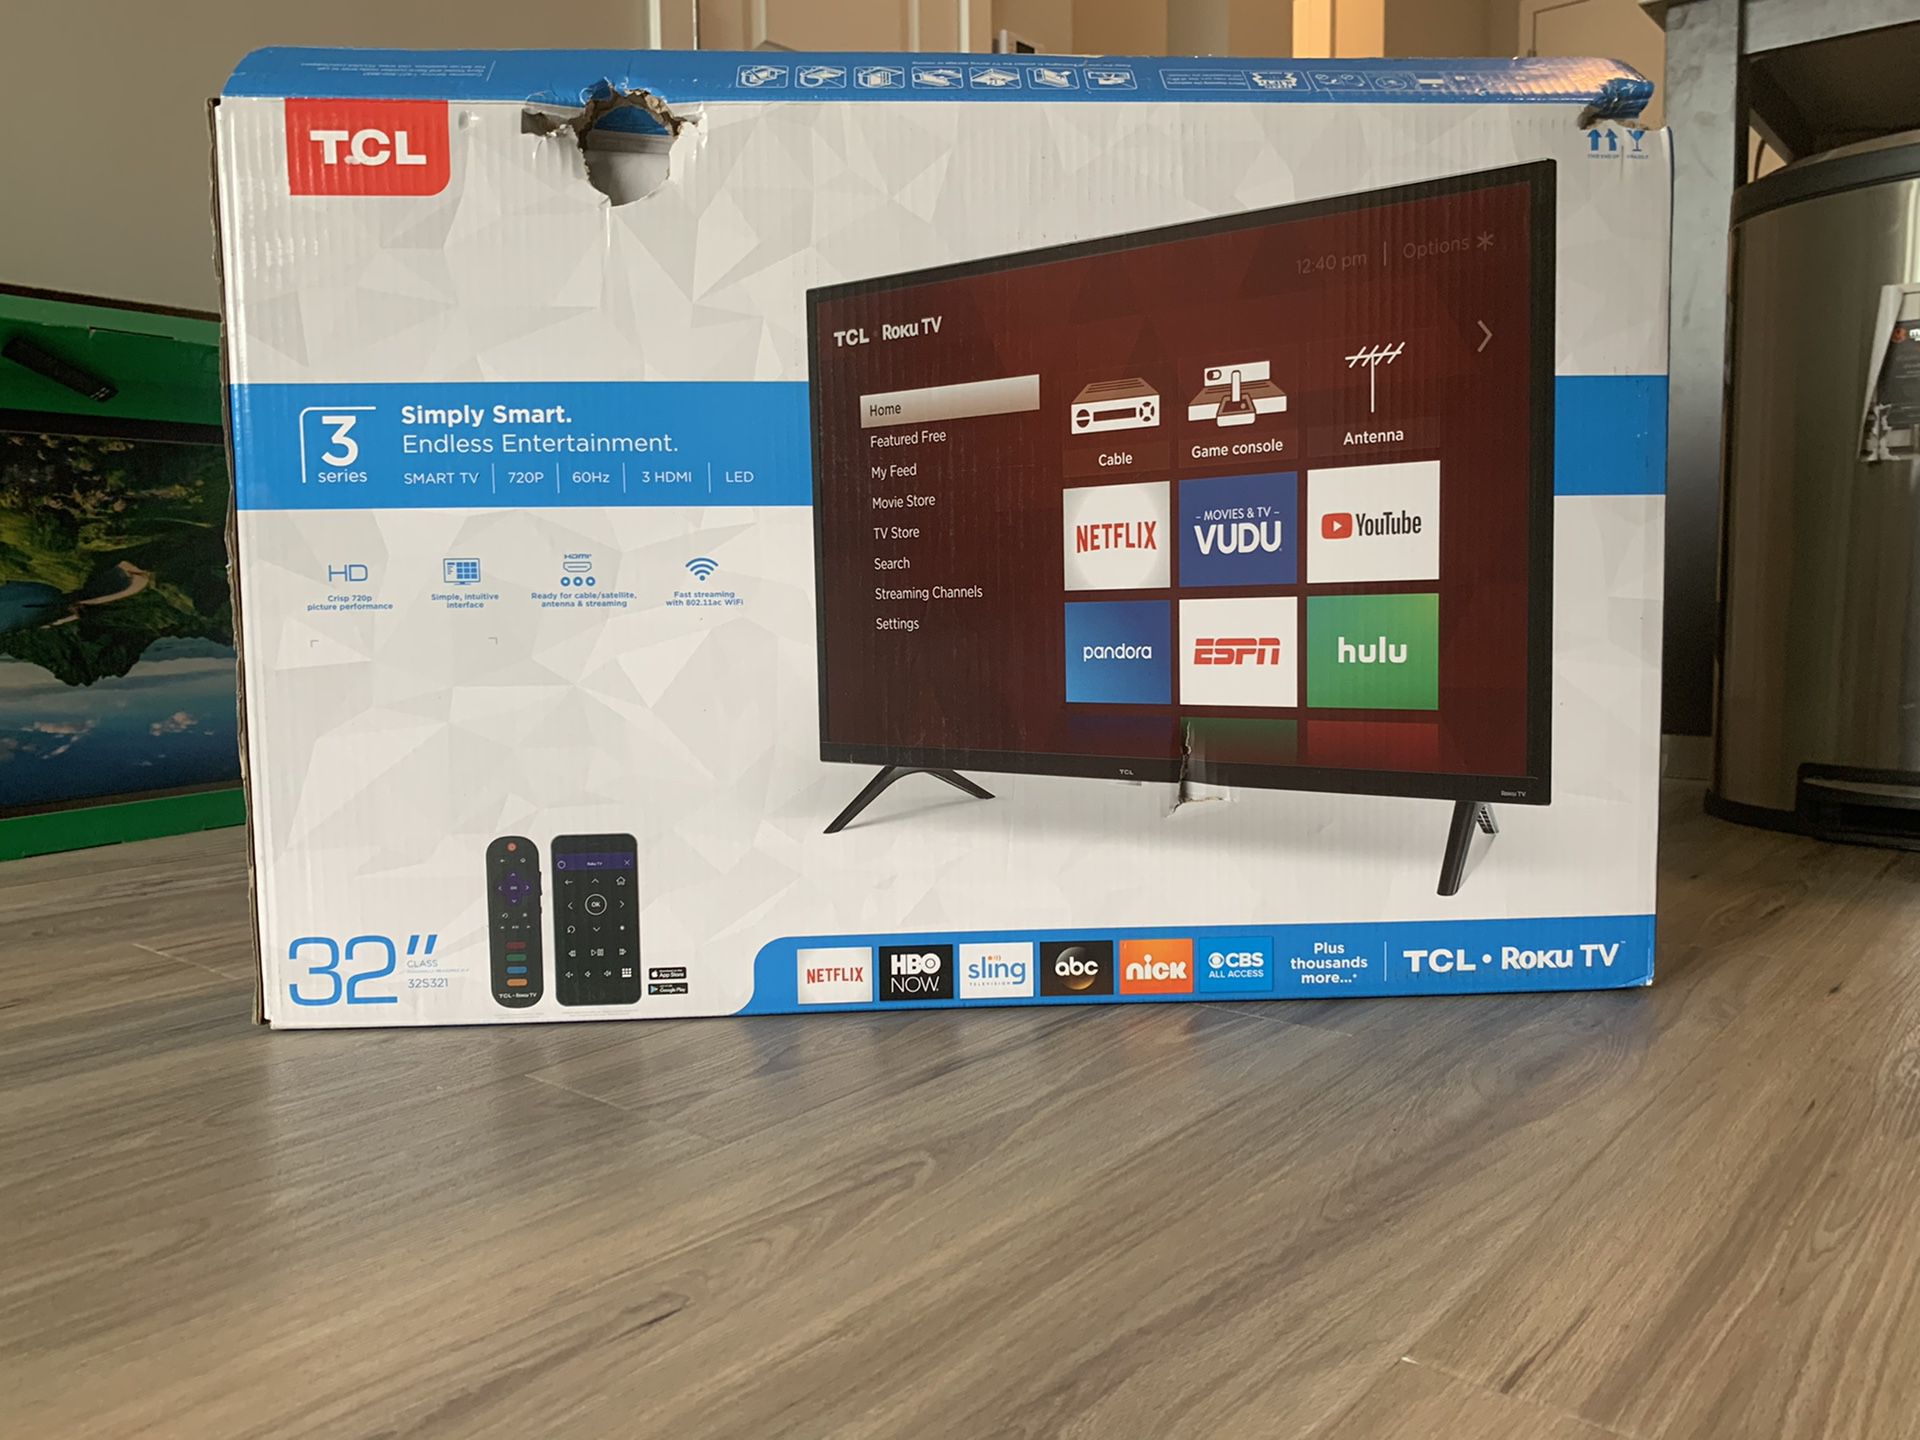 TCL 32” smart tv